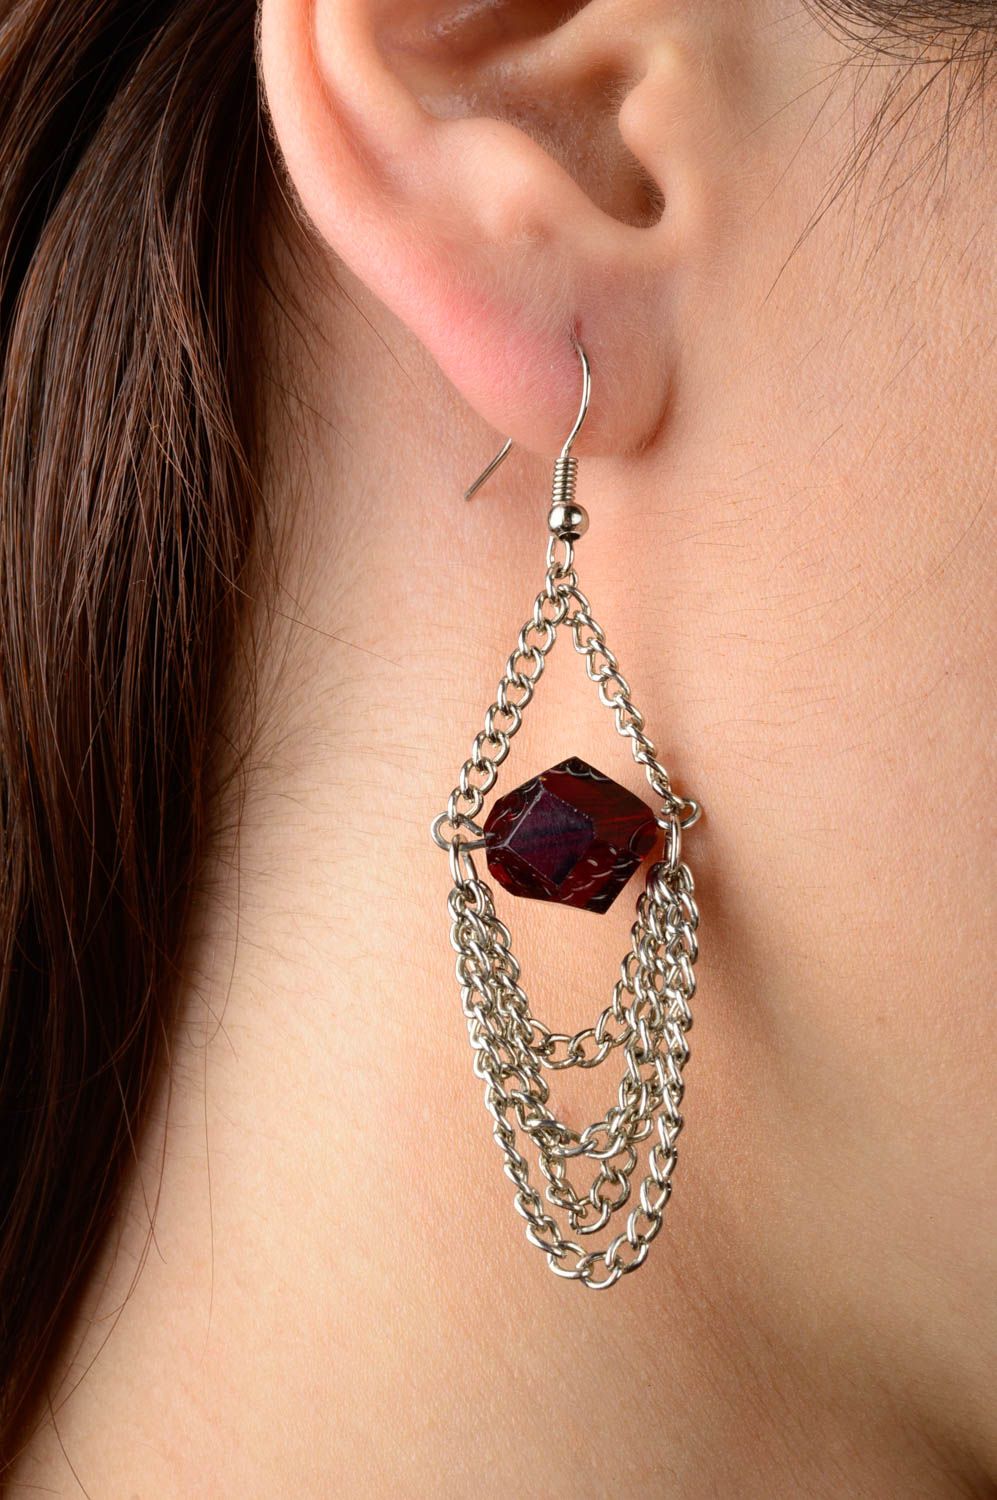 Handmade earrings designer earrings unusual accessories fashion jewelry photo 2